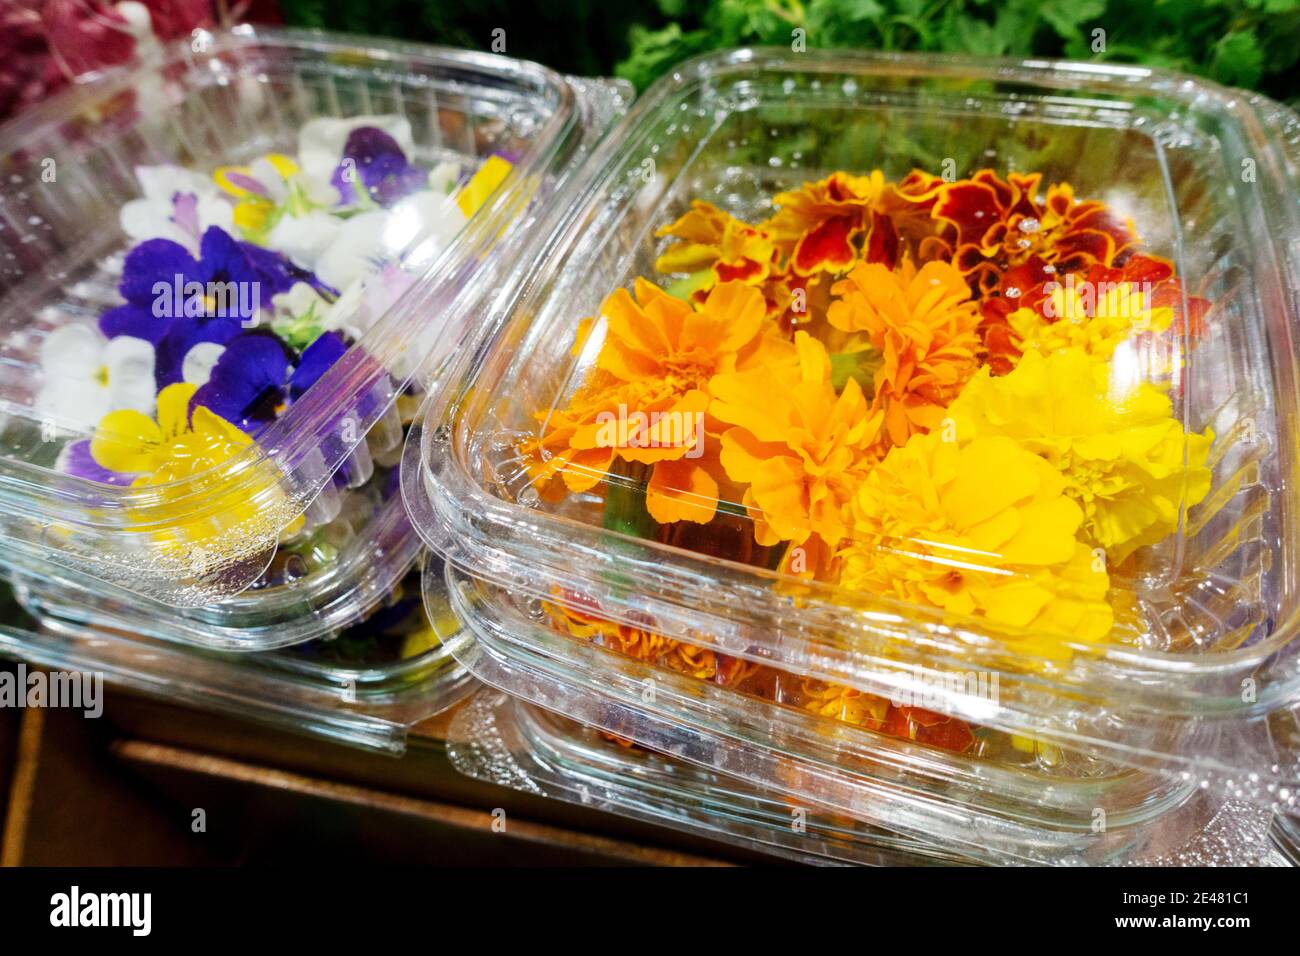 Edible flowers sale plants on market in plastic box Spain market marigolds flower Stock Photo